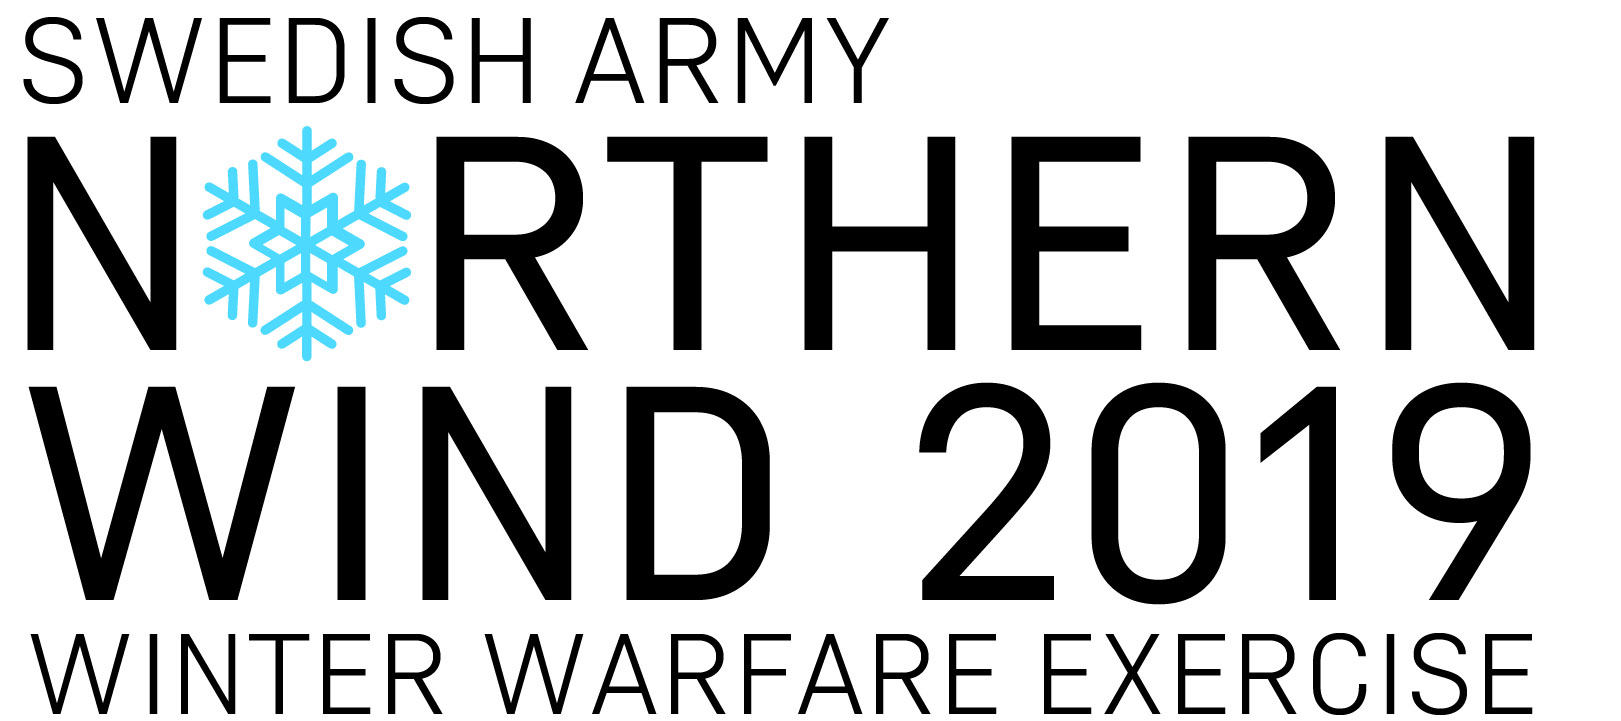 Swedish army, Northern Wind 2019, Winter warfare exercise